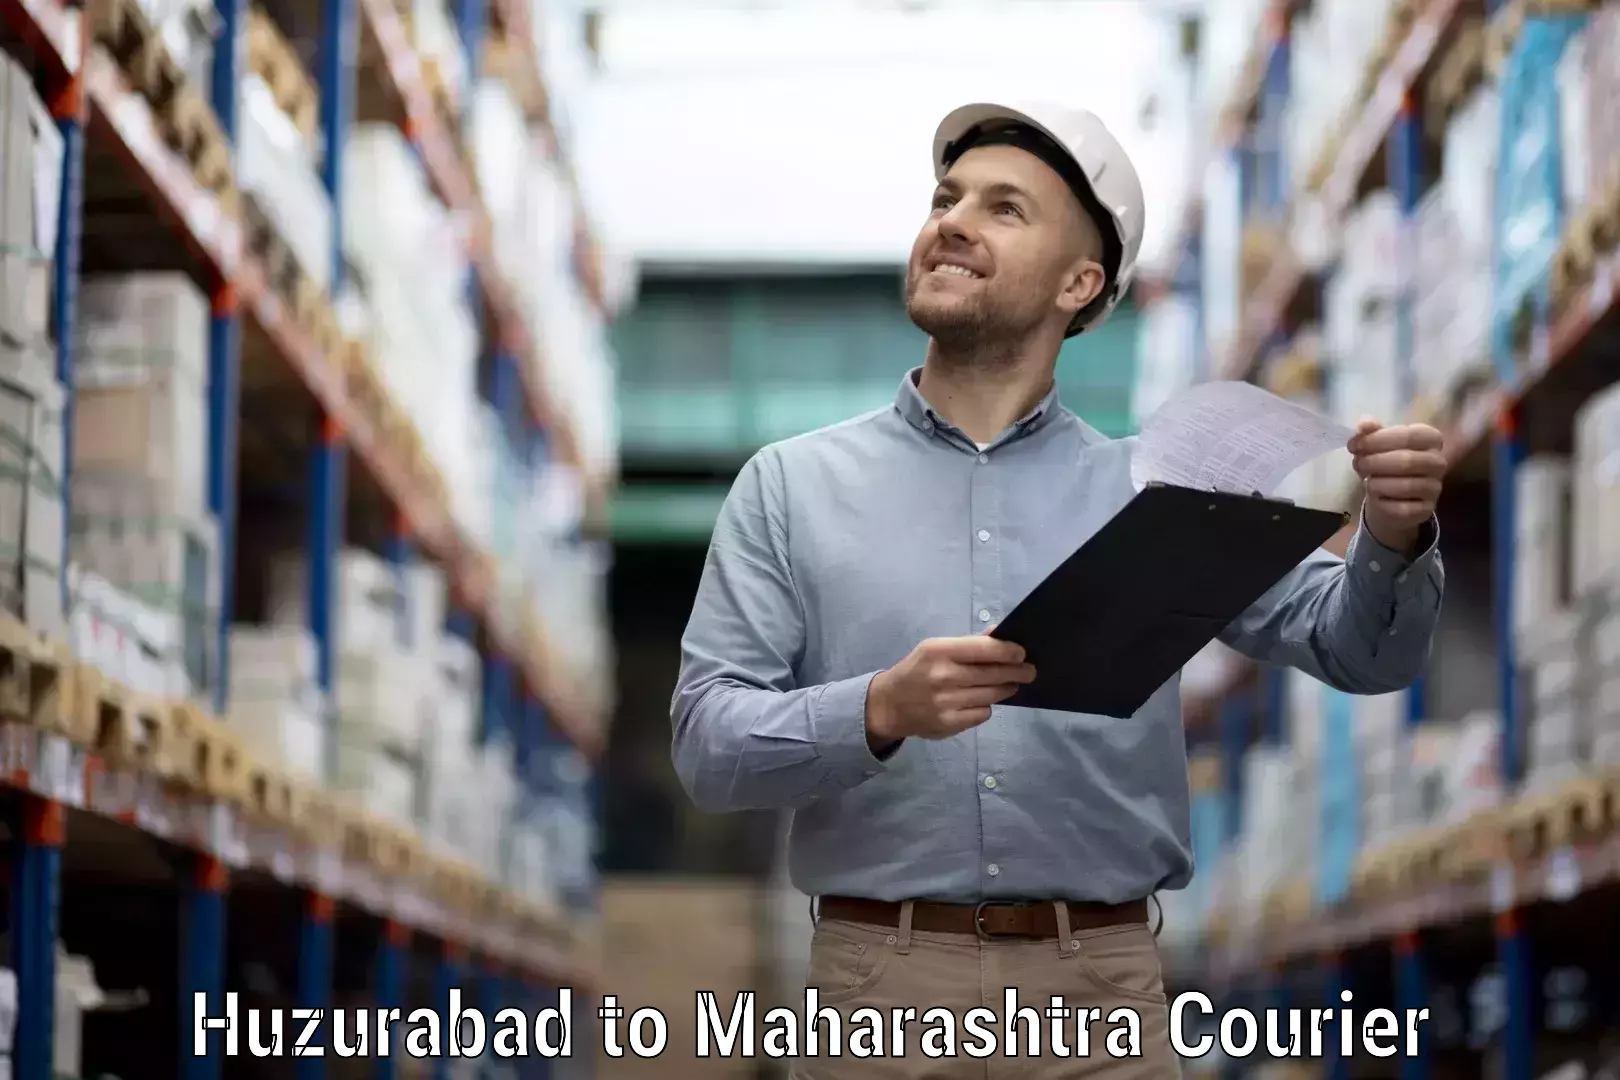 Digital courier platforms Huzurabad to Shirpur